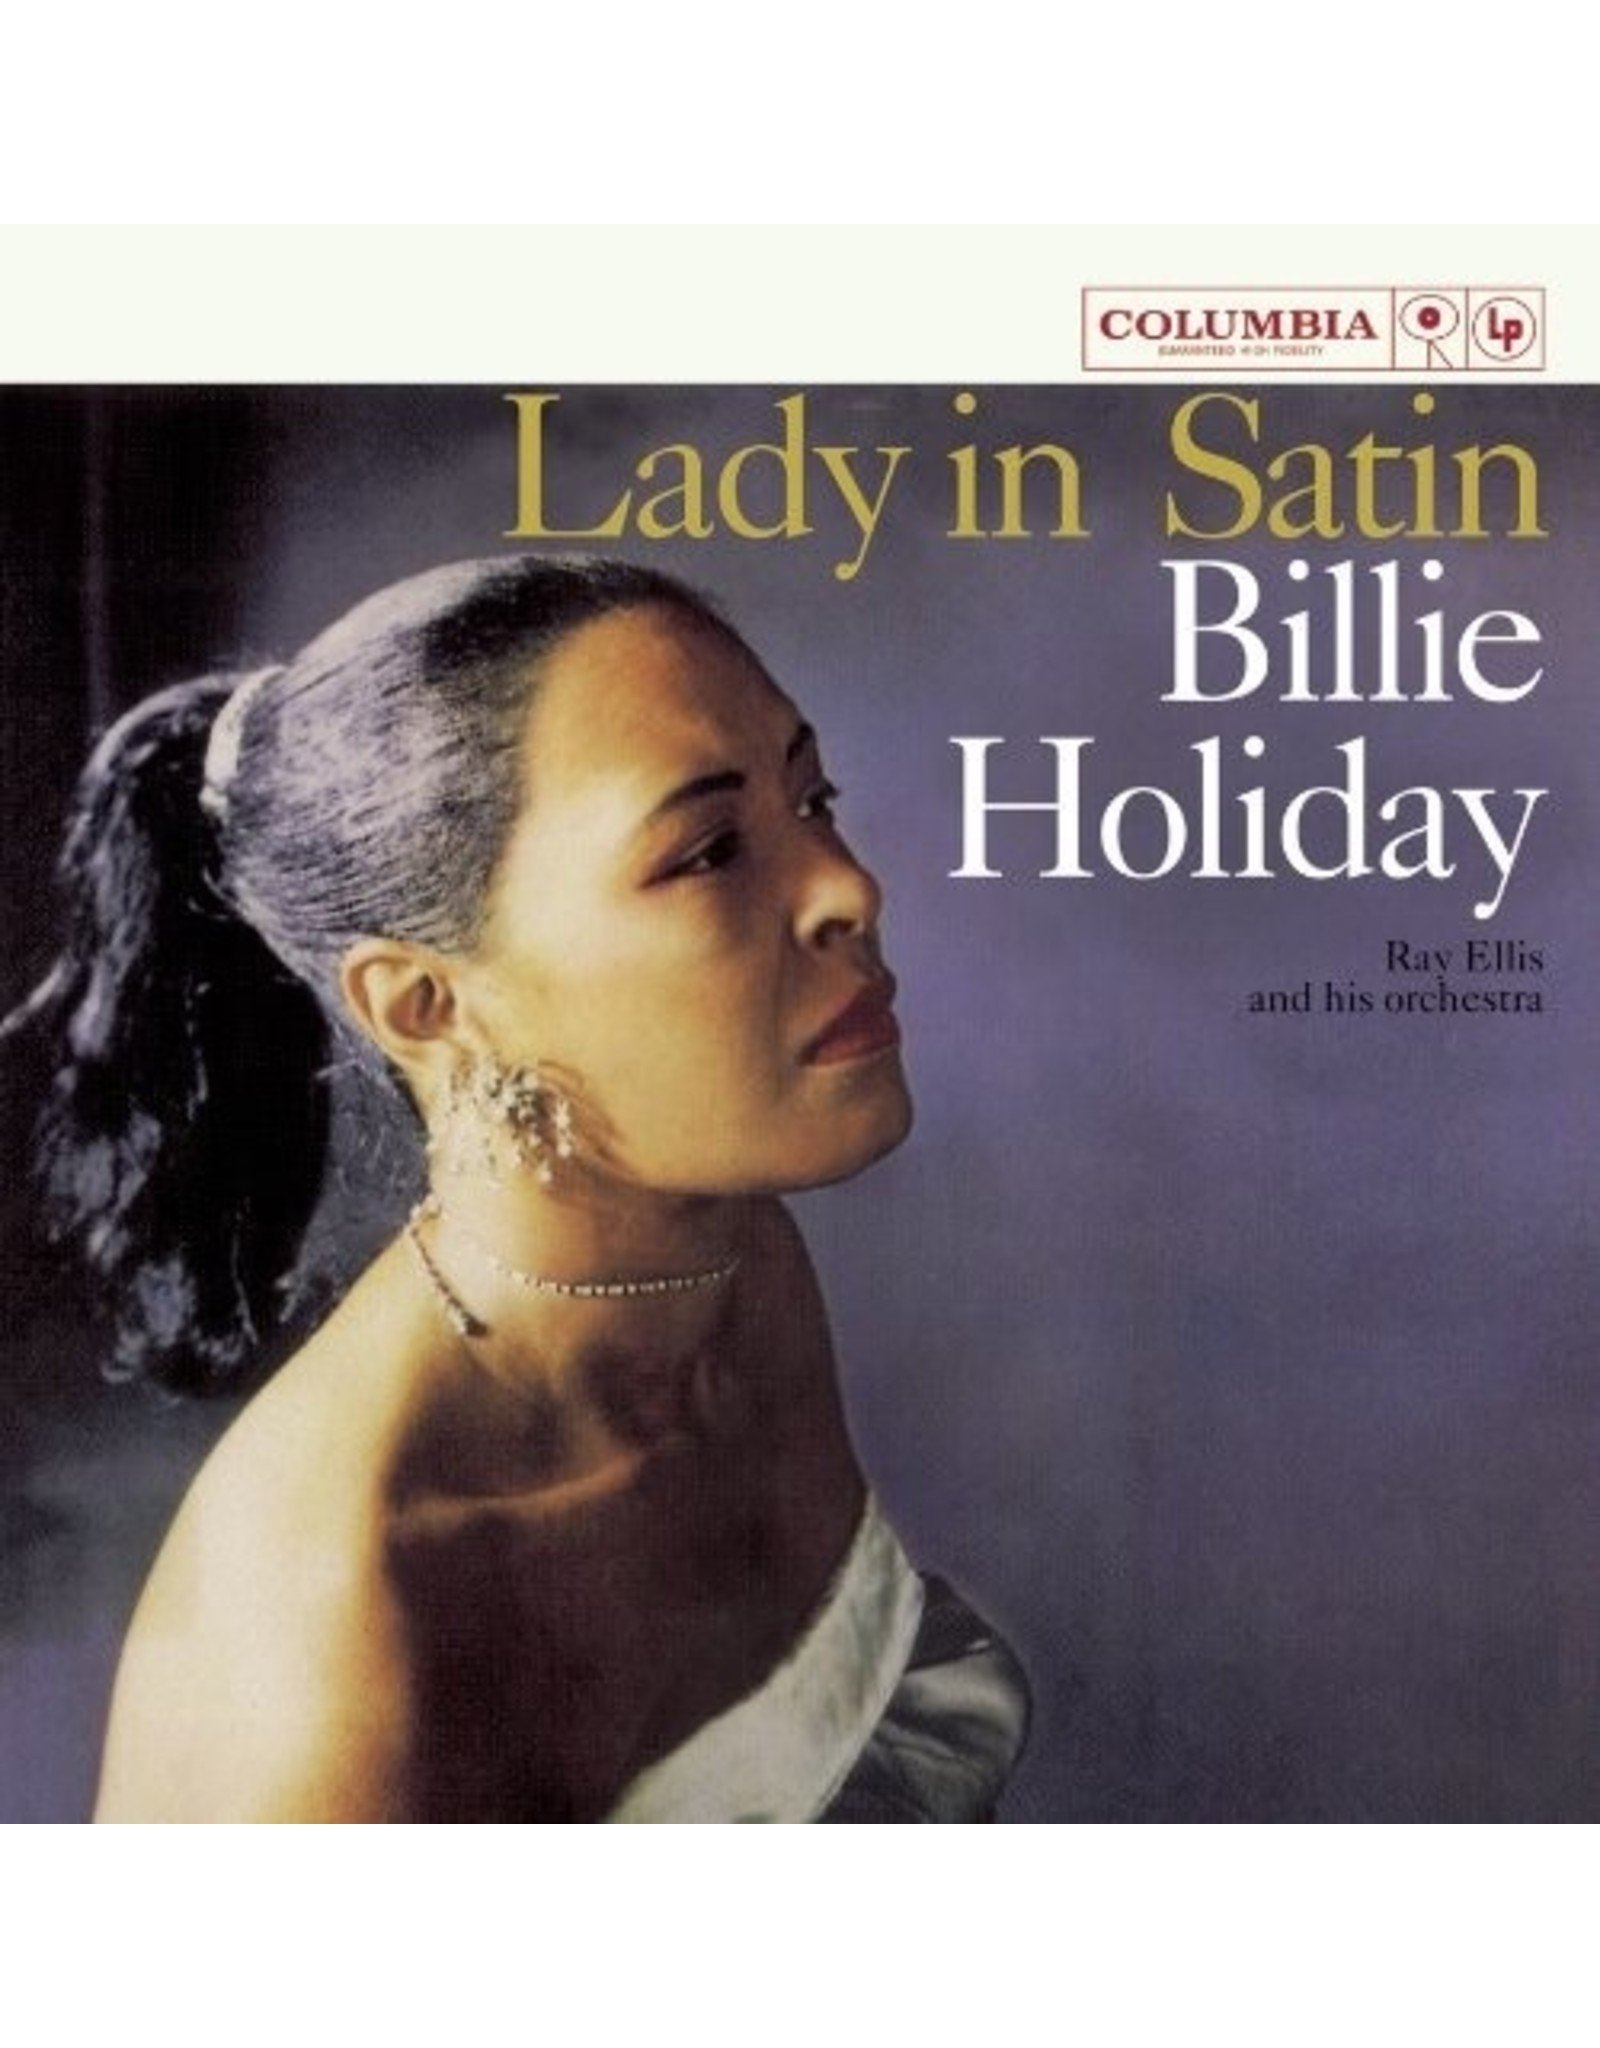 New Vinyl Billie Holiday - Lady In Satin LP